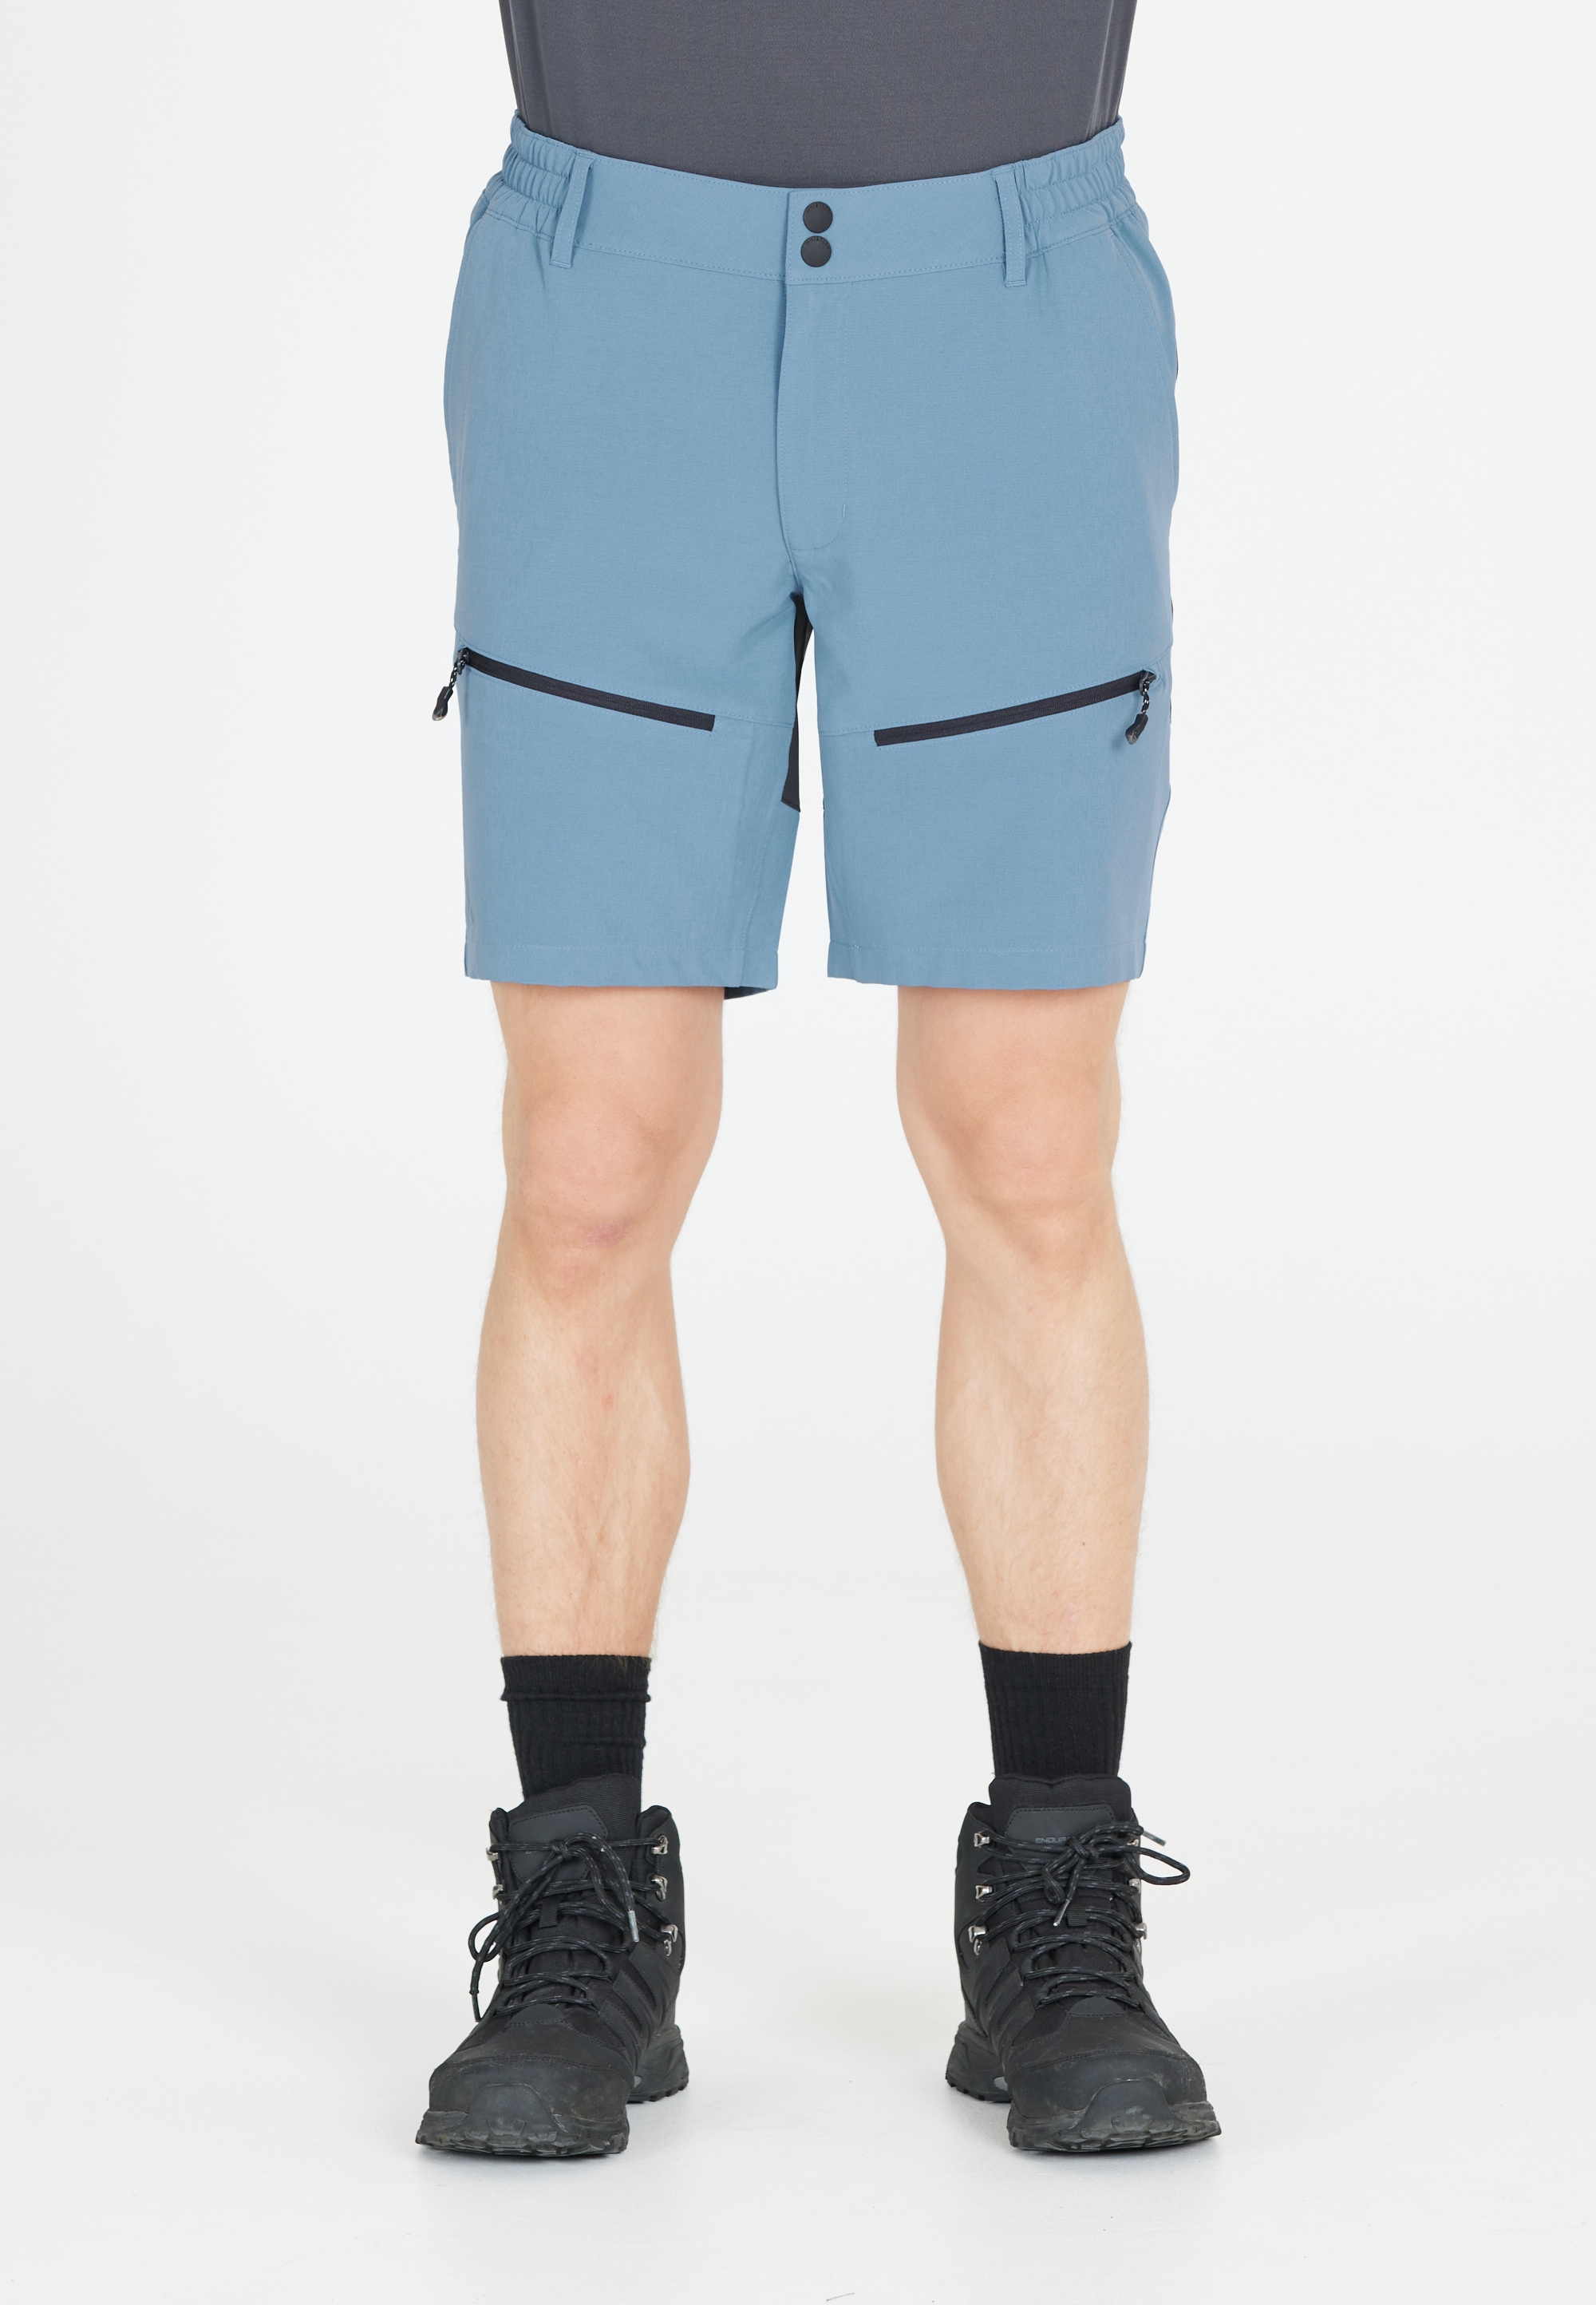 WHISTLER Shorts, mit 4-Wege-Stretch-Material